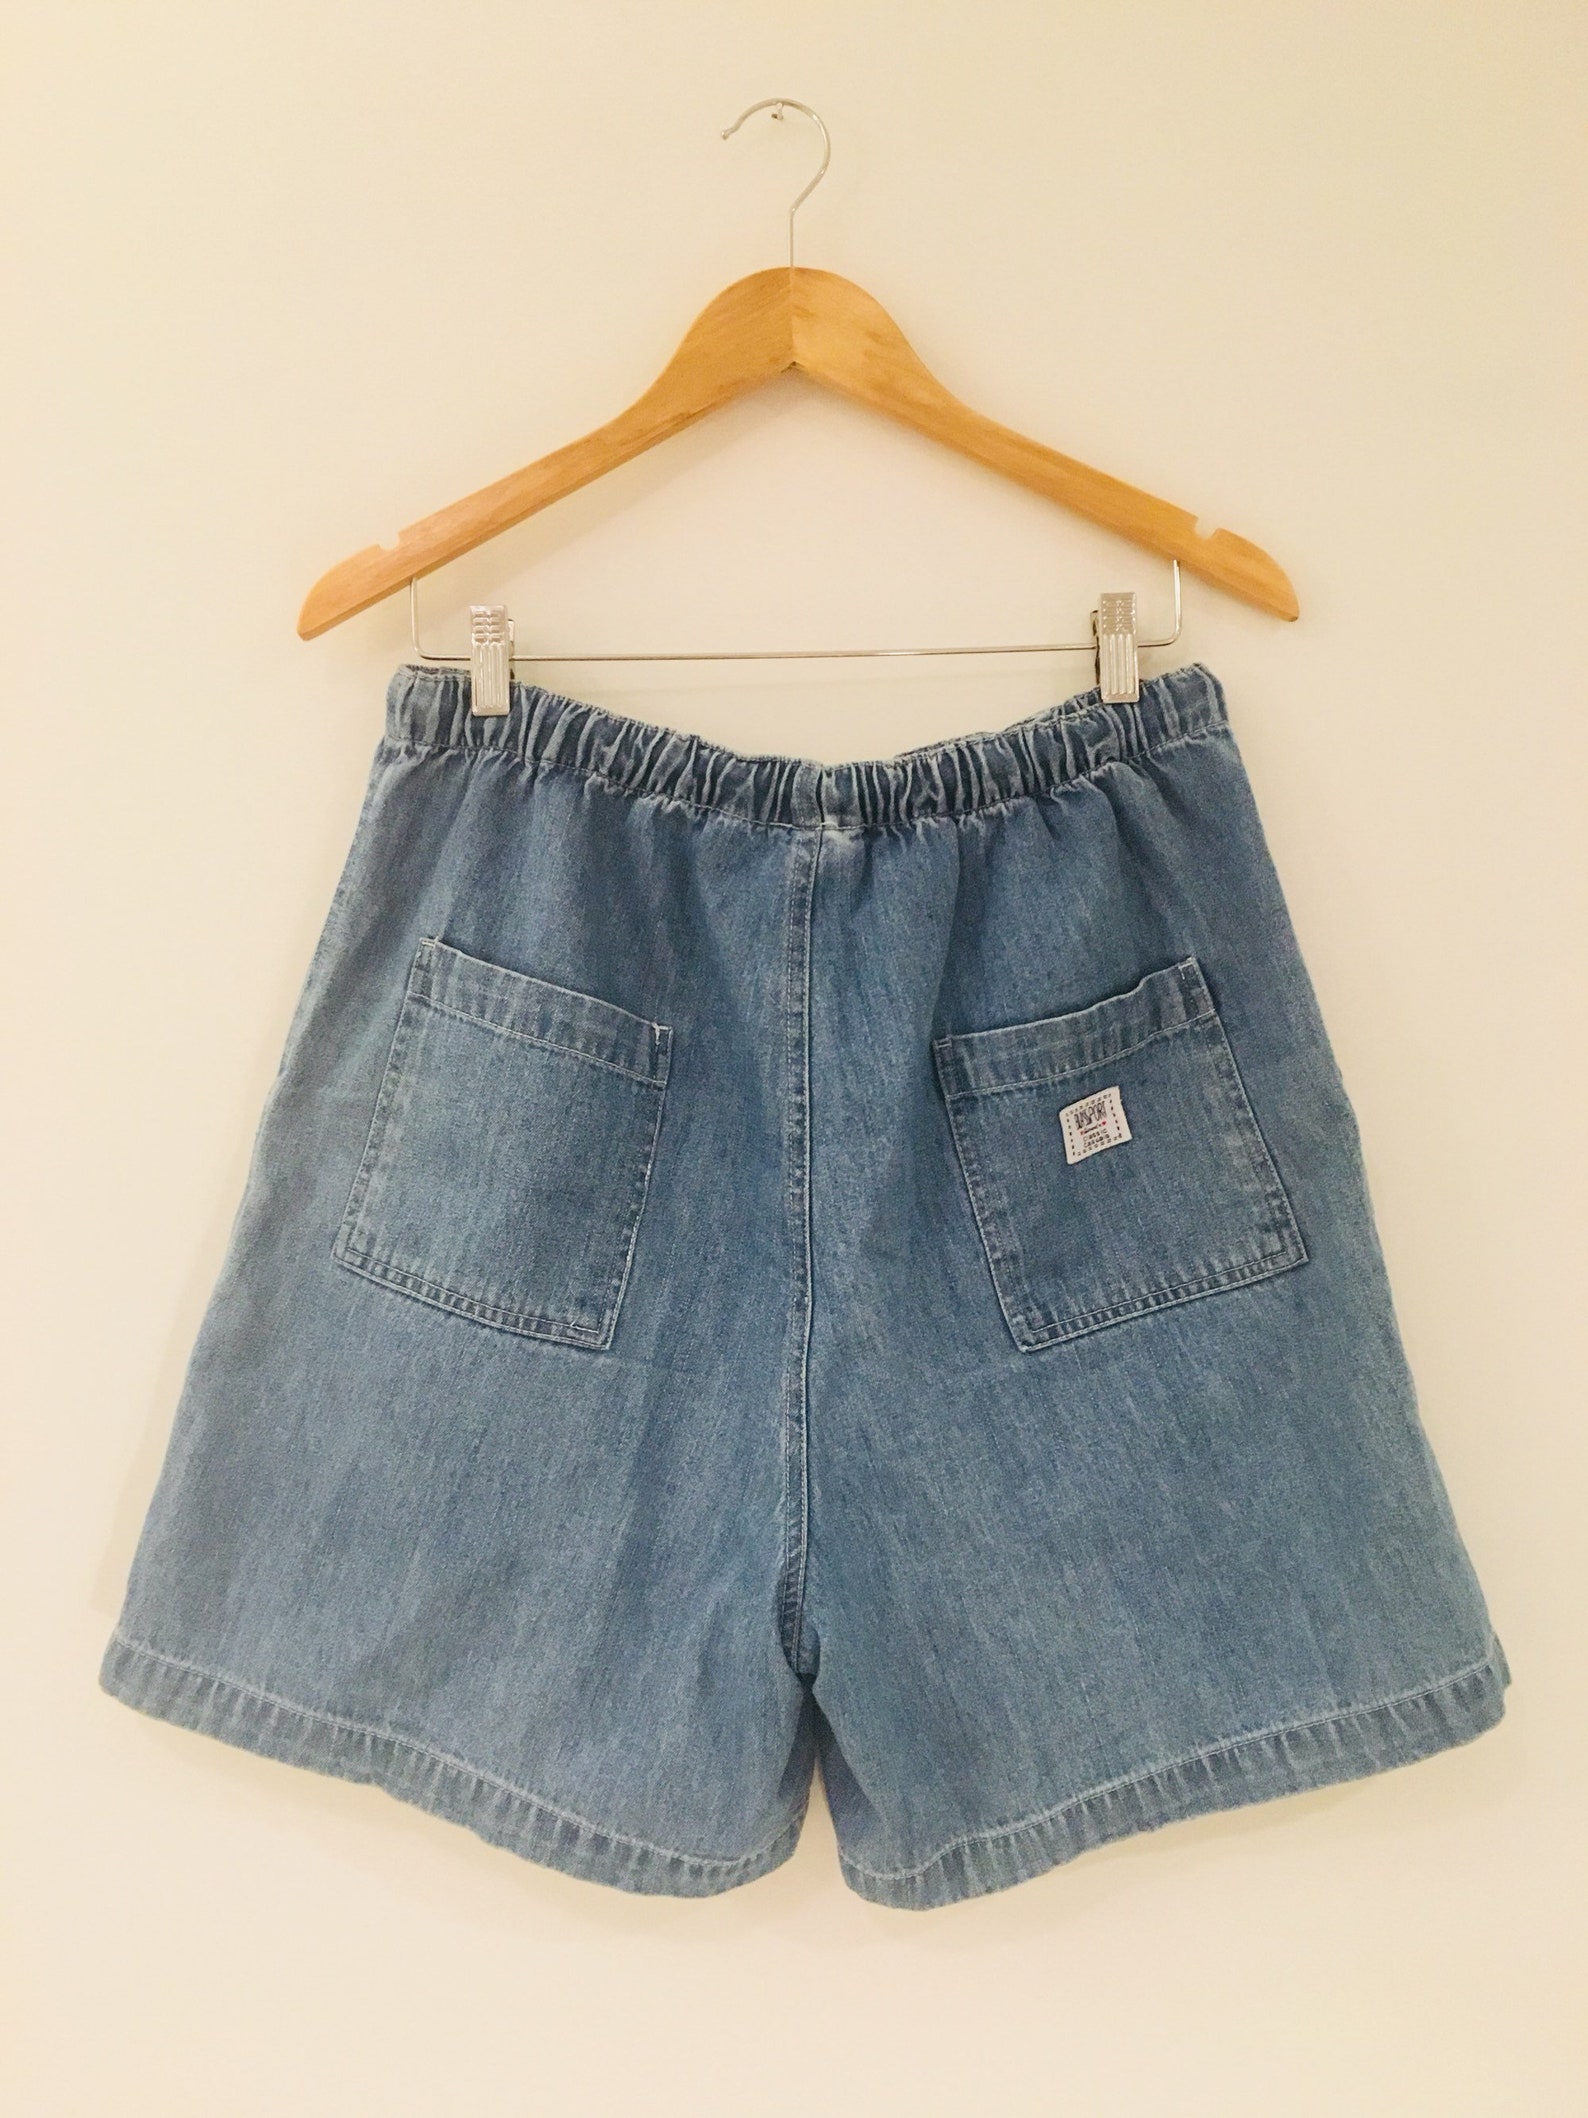 Vintage jean shorts by Blassport '90s jean shorts | Etsy